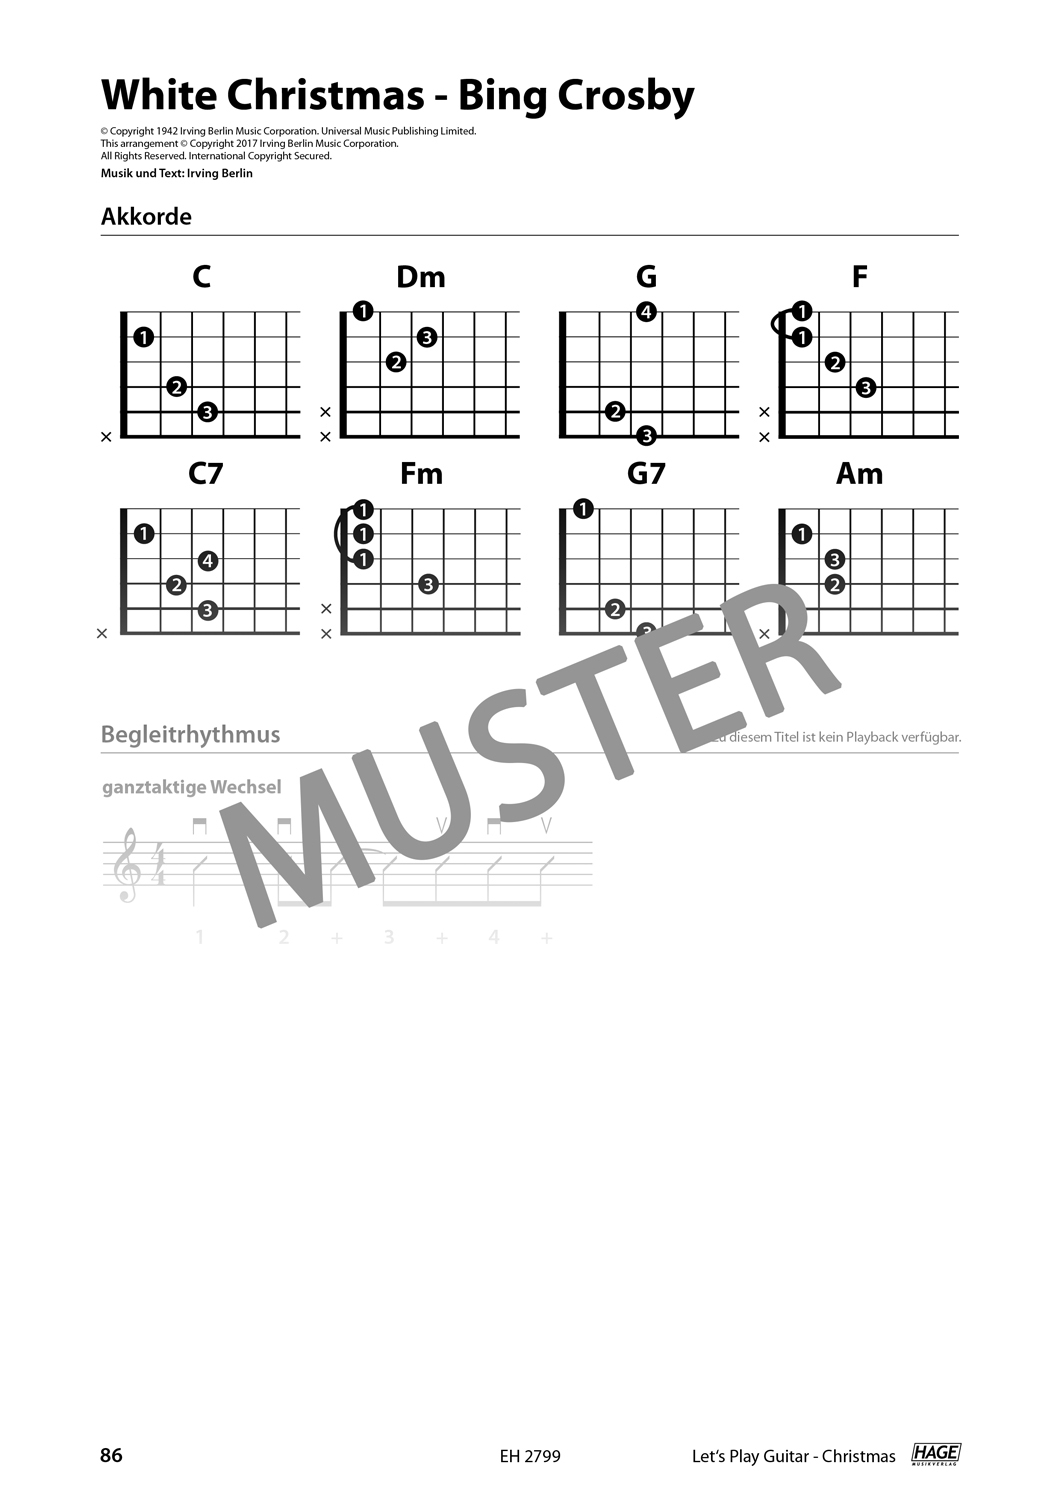 Let's Play Guitar Christmas (mit QR-Codes) Seiten 11